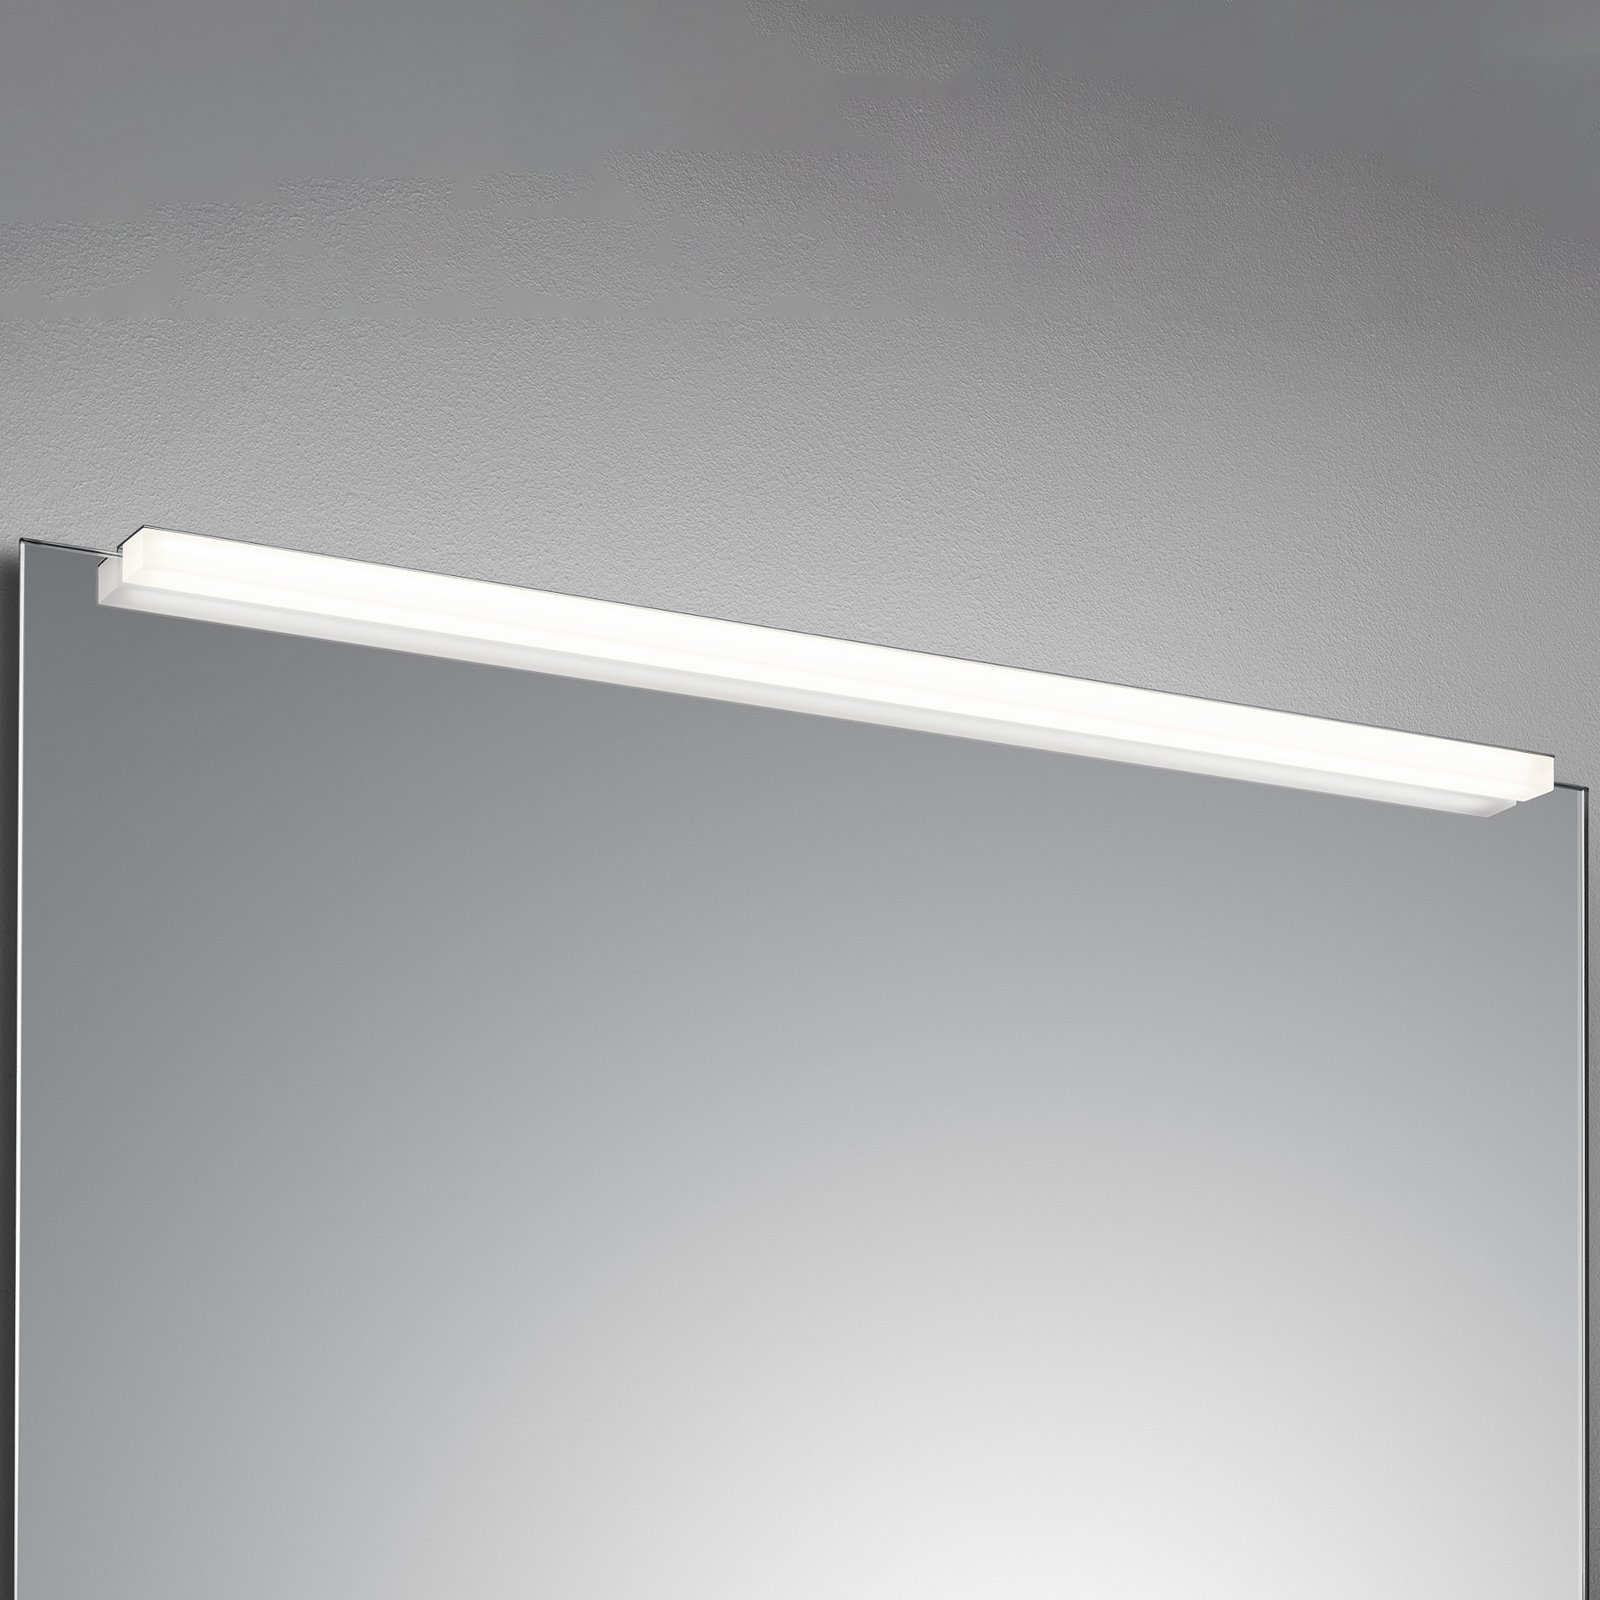 Helestra Onta applique pour miroir LED, 90 cm